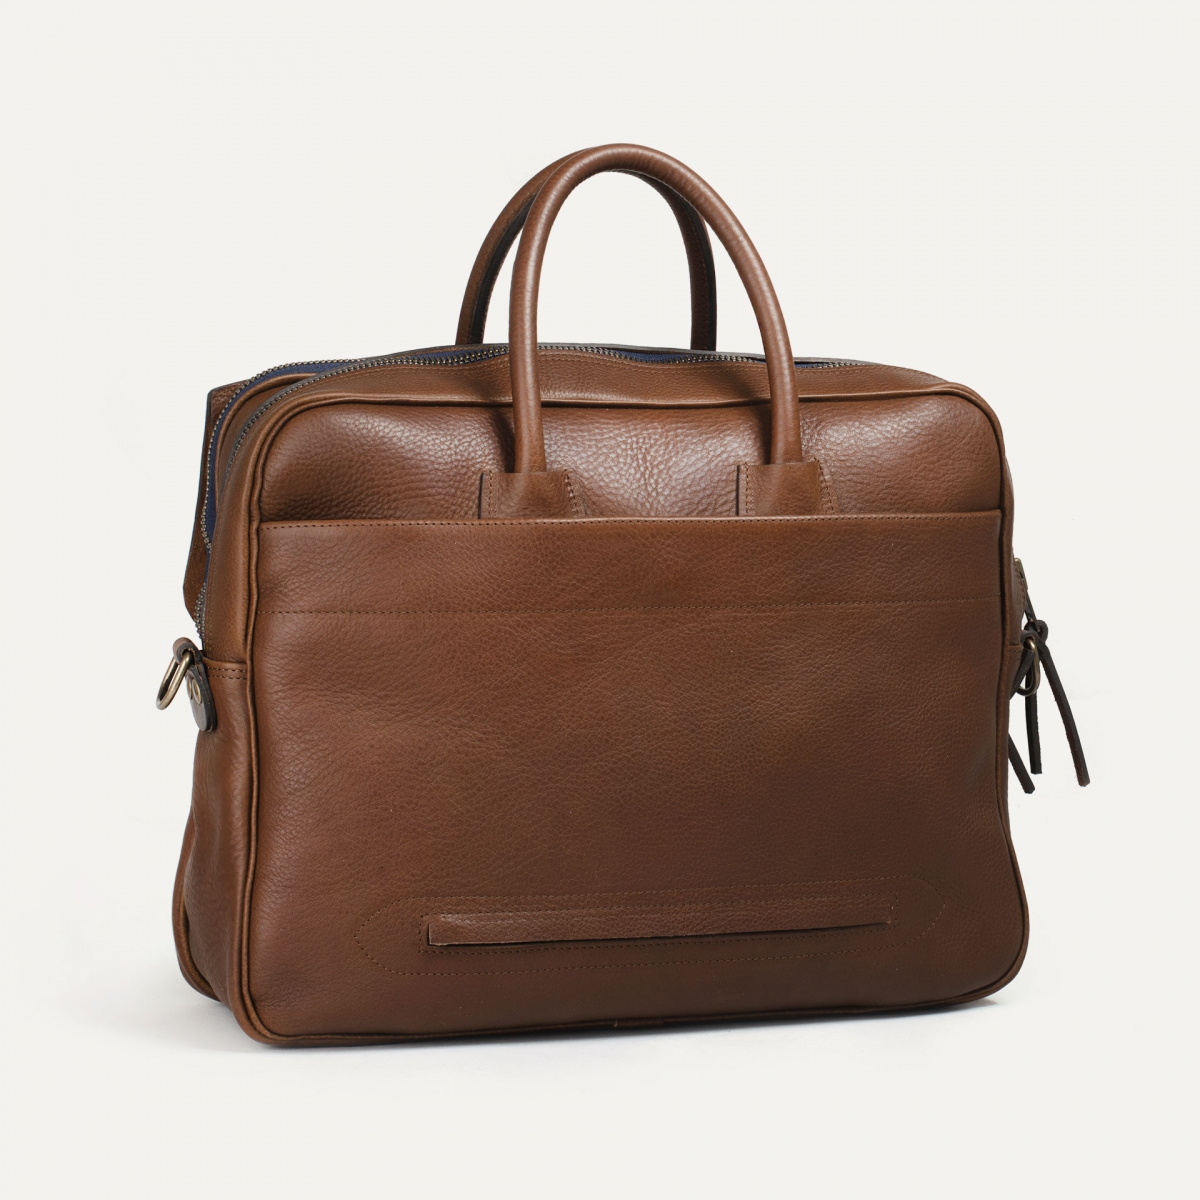 Zeppo Business bag - Cuba Libre - Laptop bag for Men I Men's Leather ...